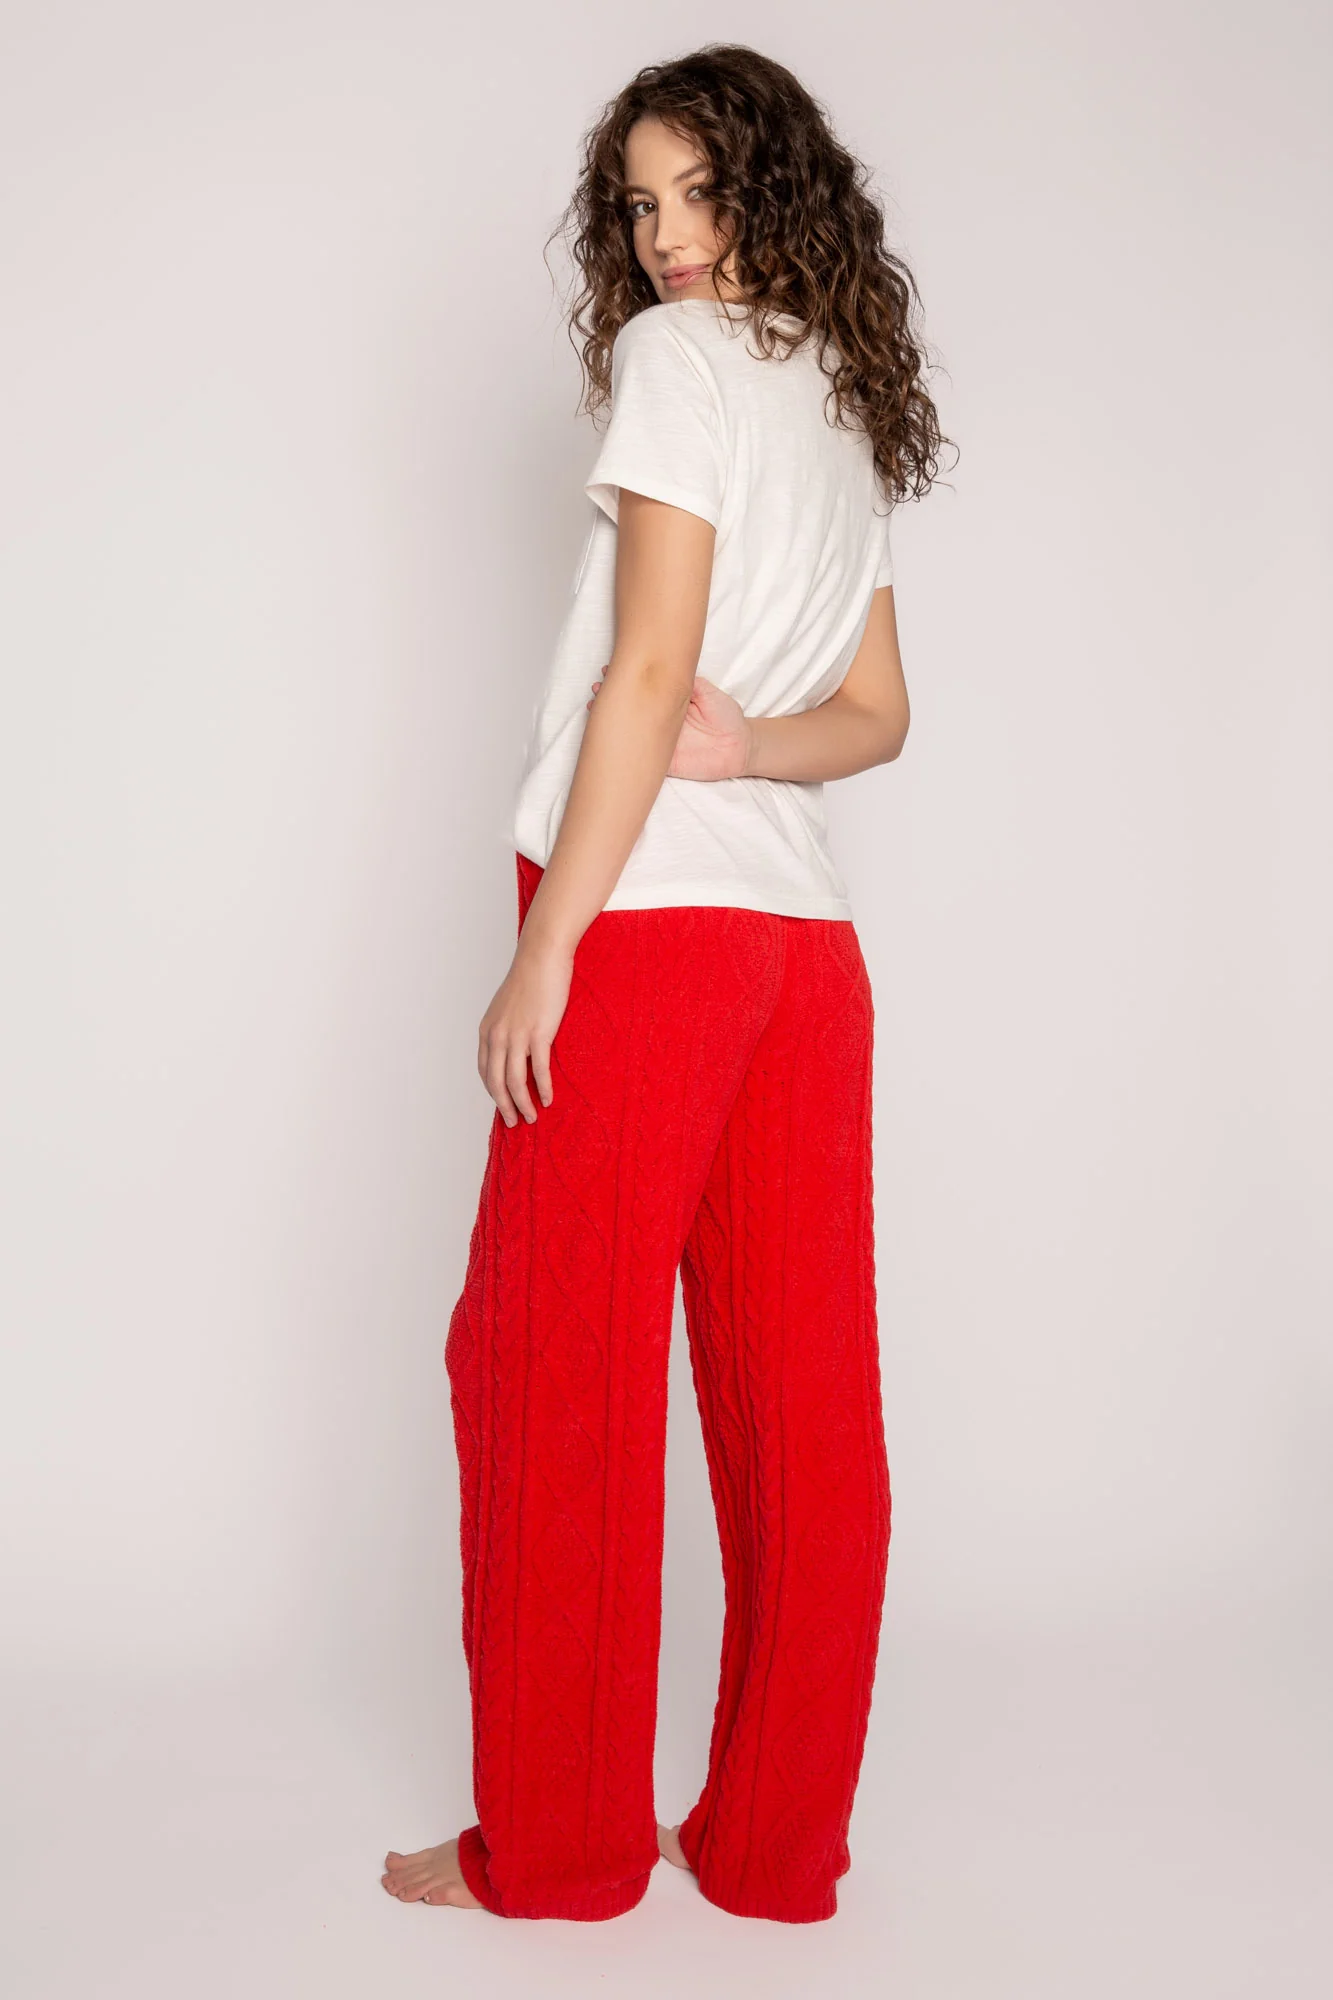 Head-to-Toe Red: Zara Knit Jogging Pants